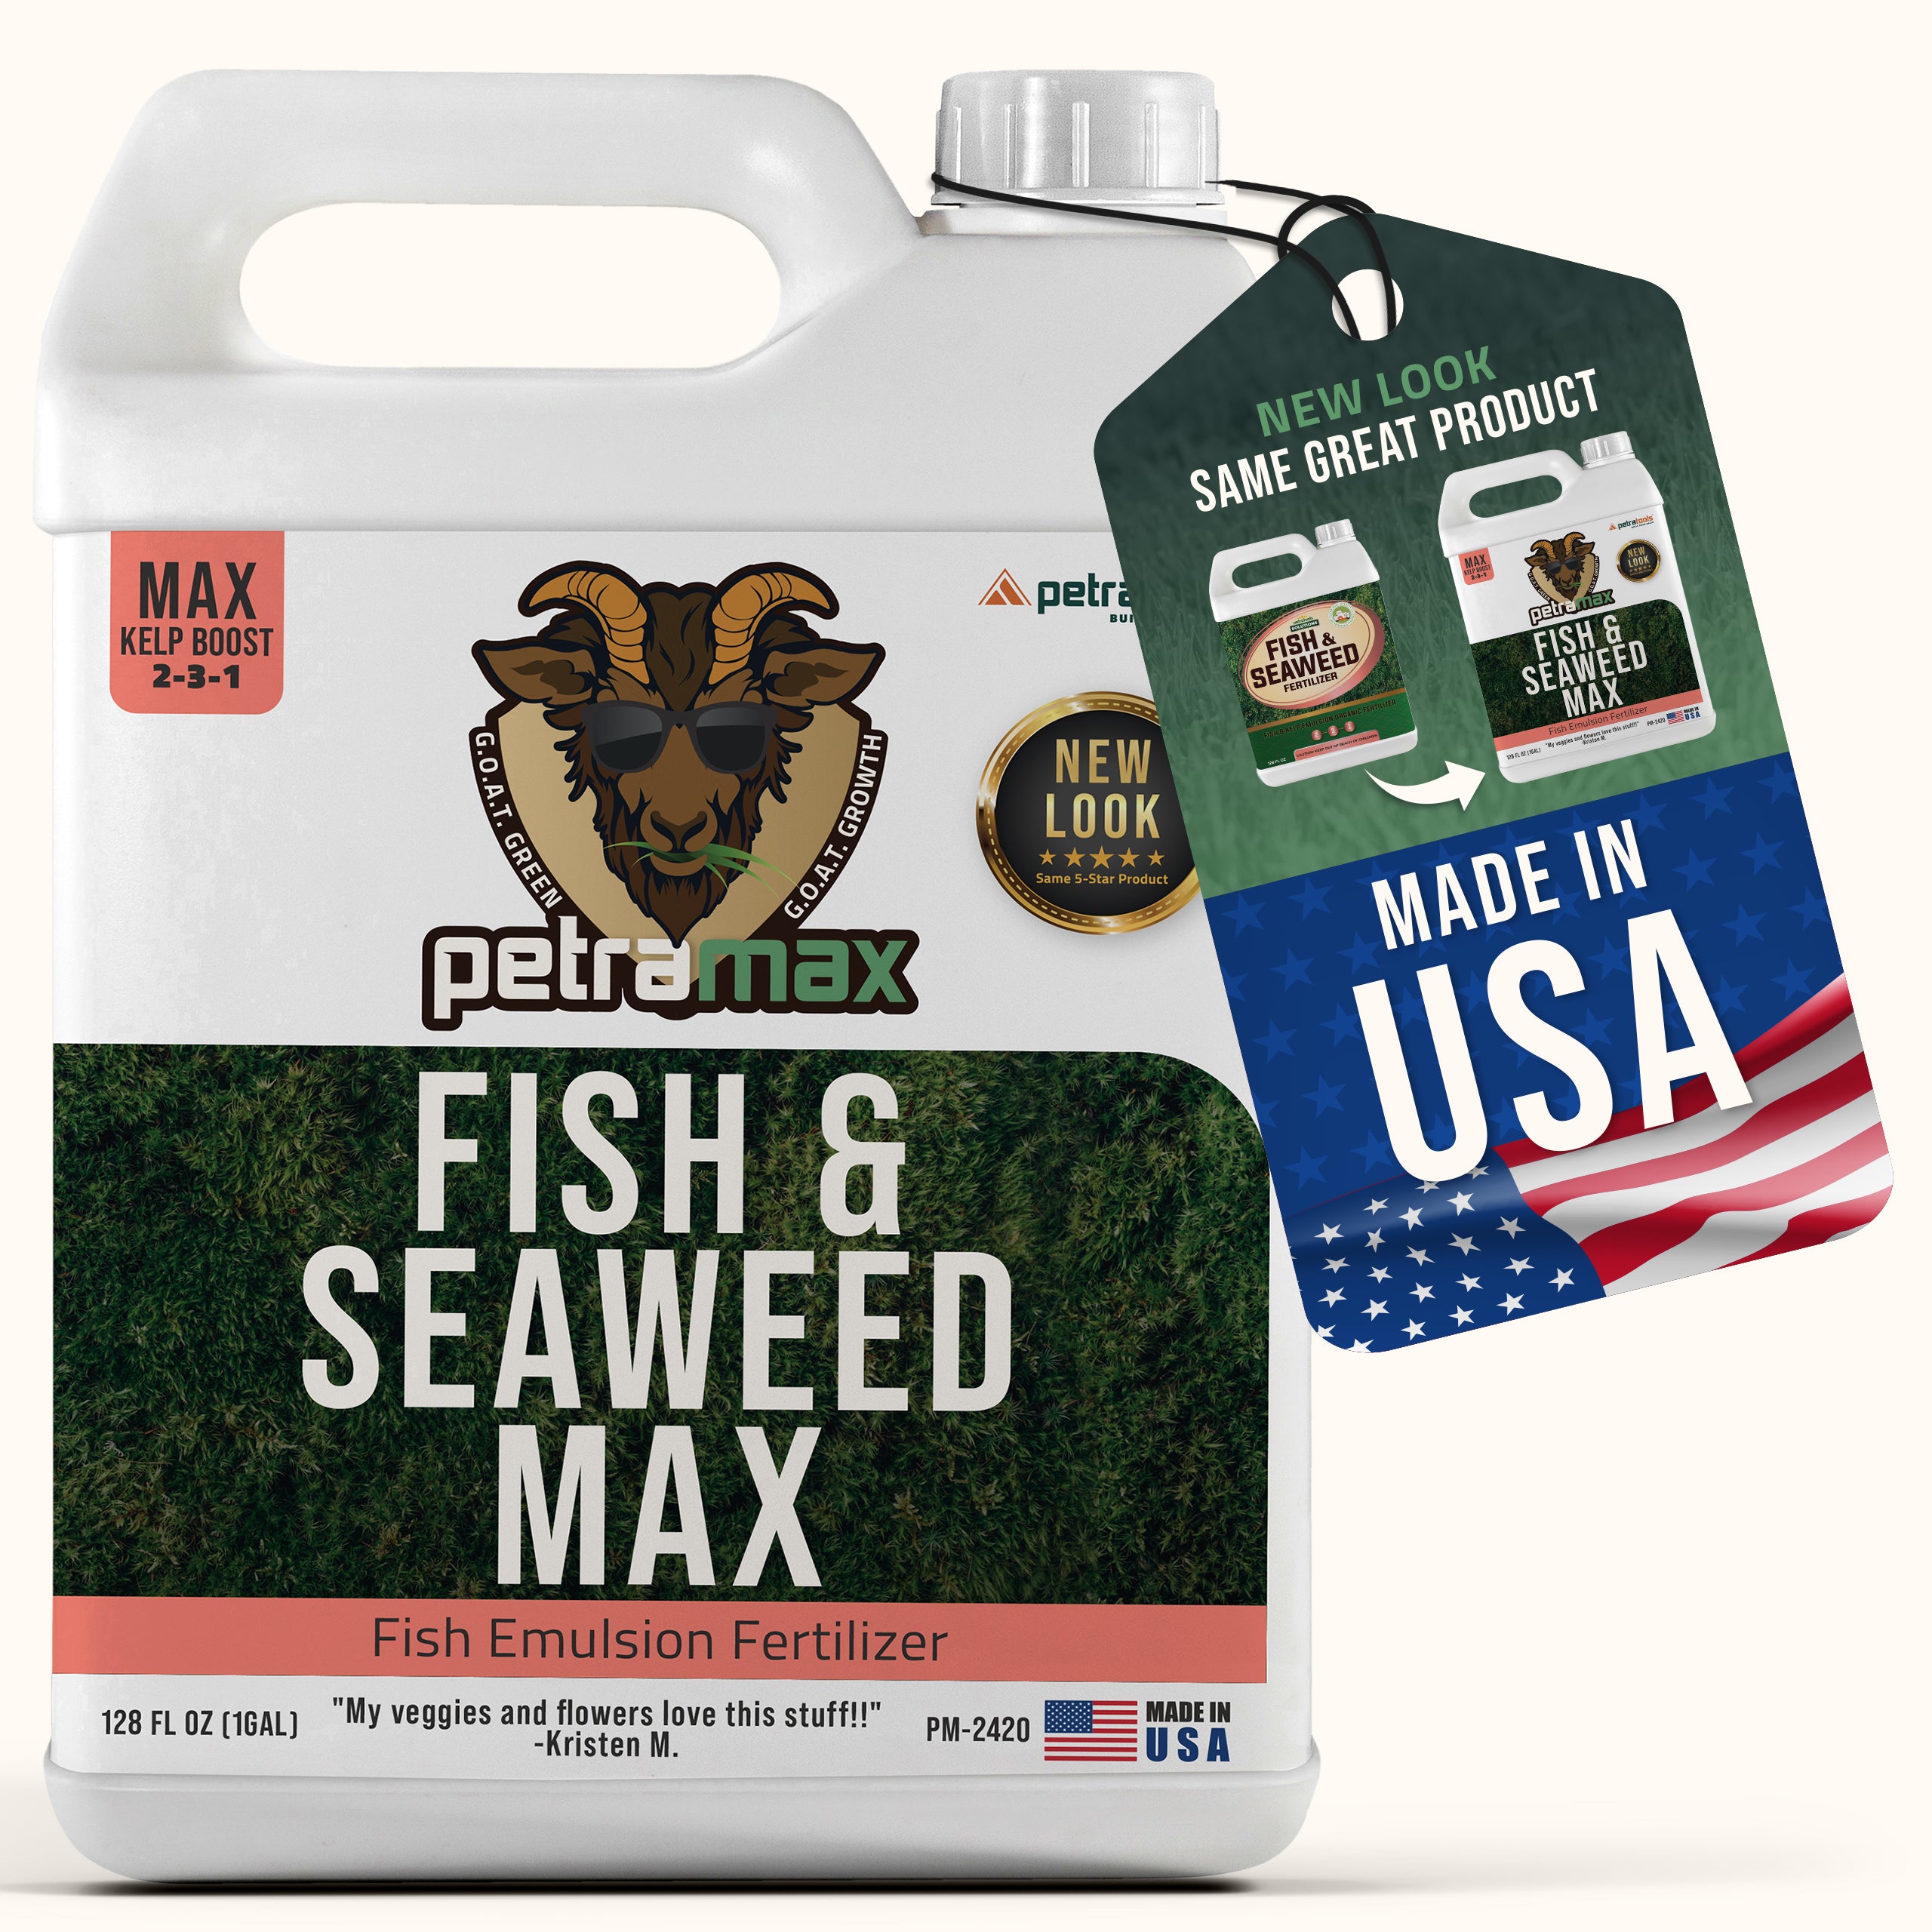 PetraMax Fish & Seaweed Fertilizer Max